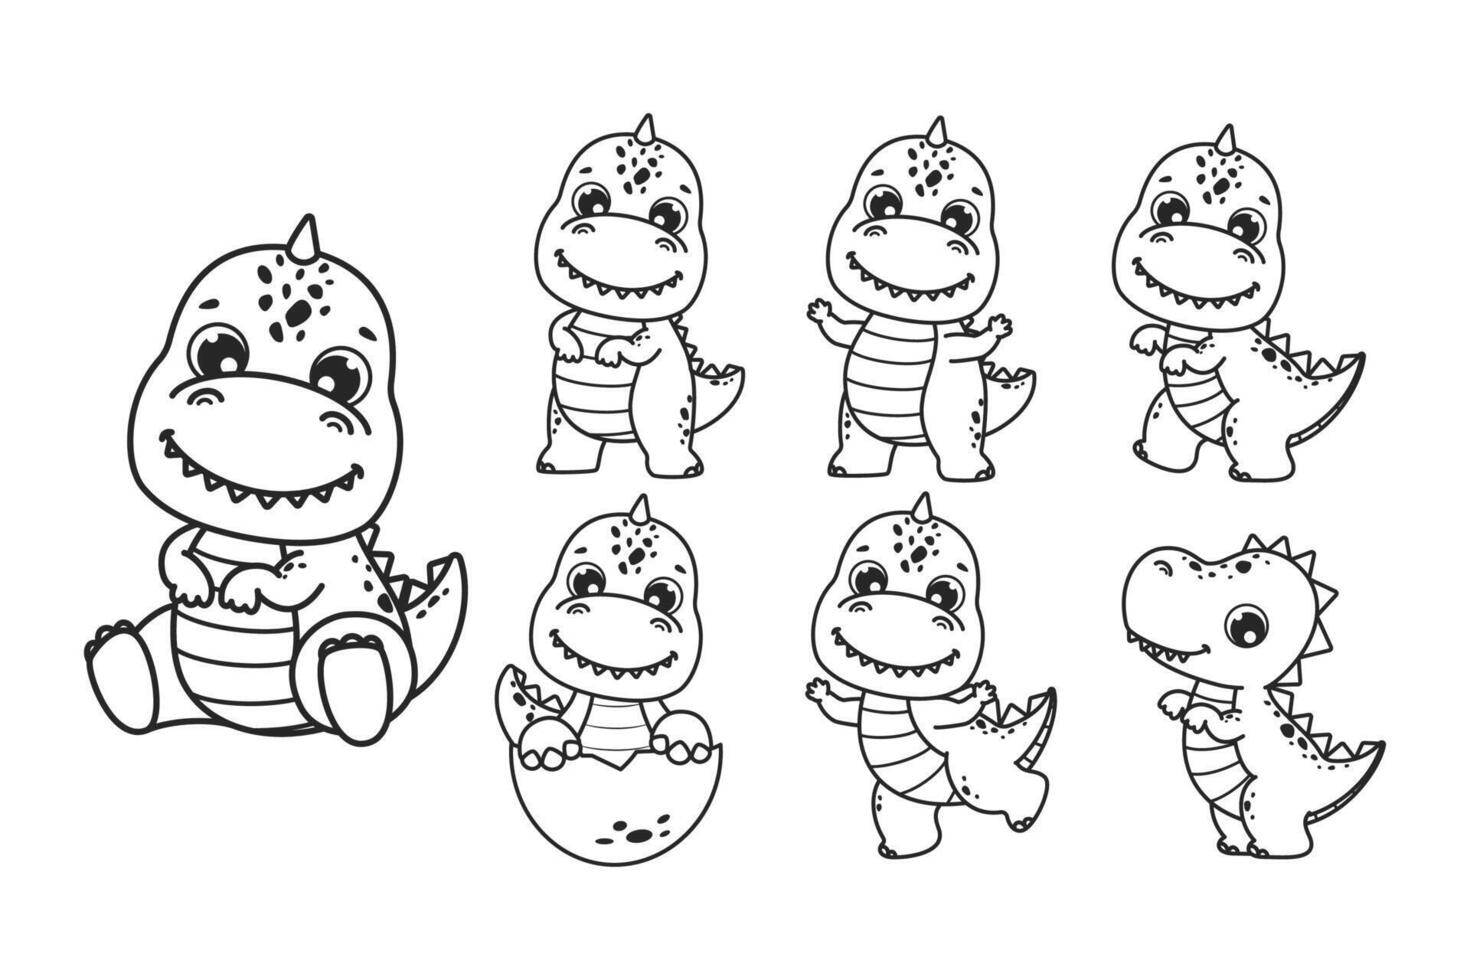 clipart conjunto de linda bebé dinosaurios tirano saurio Rex en varios posa vector ilustración en dibujos animados estilo.